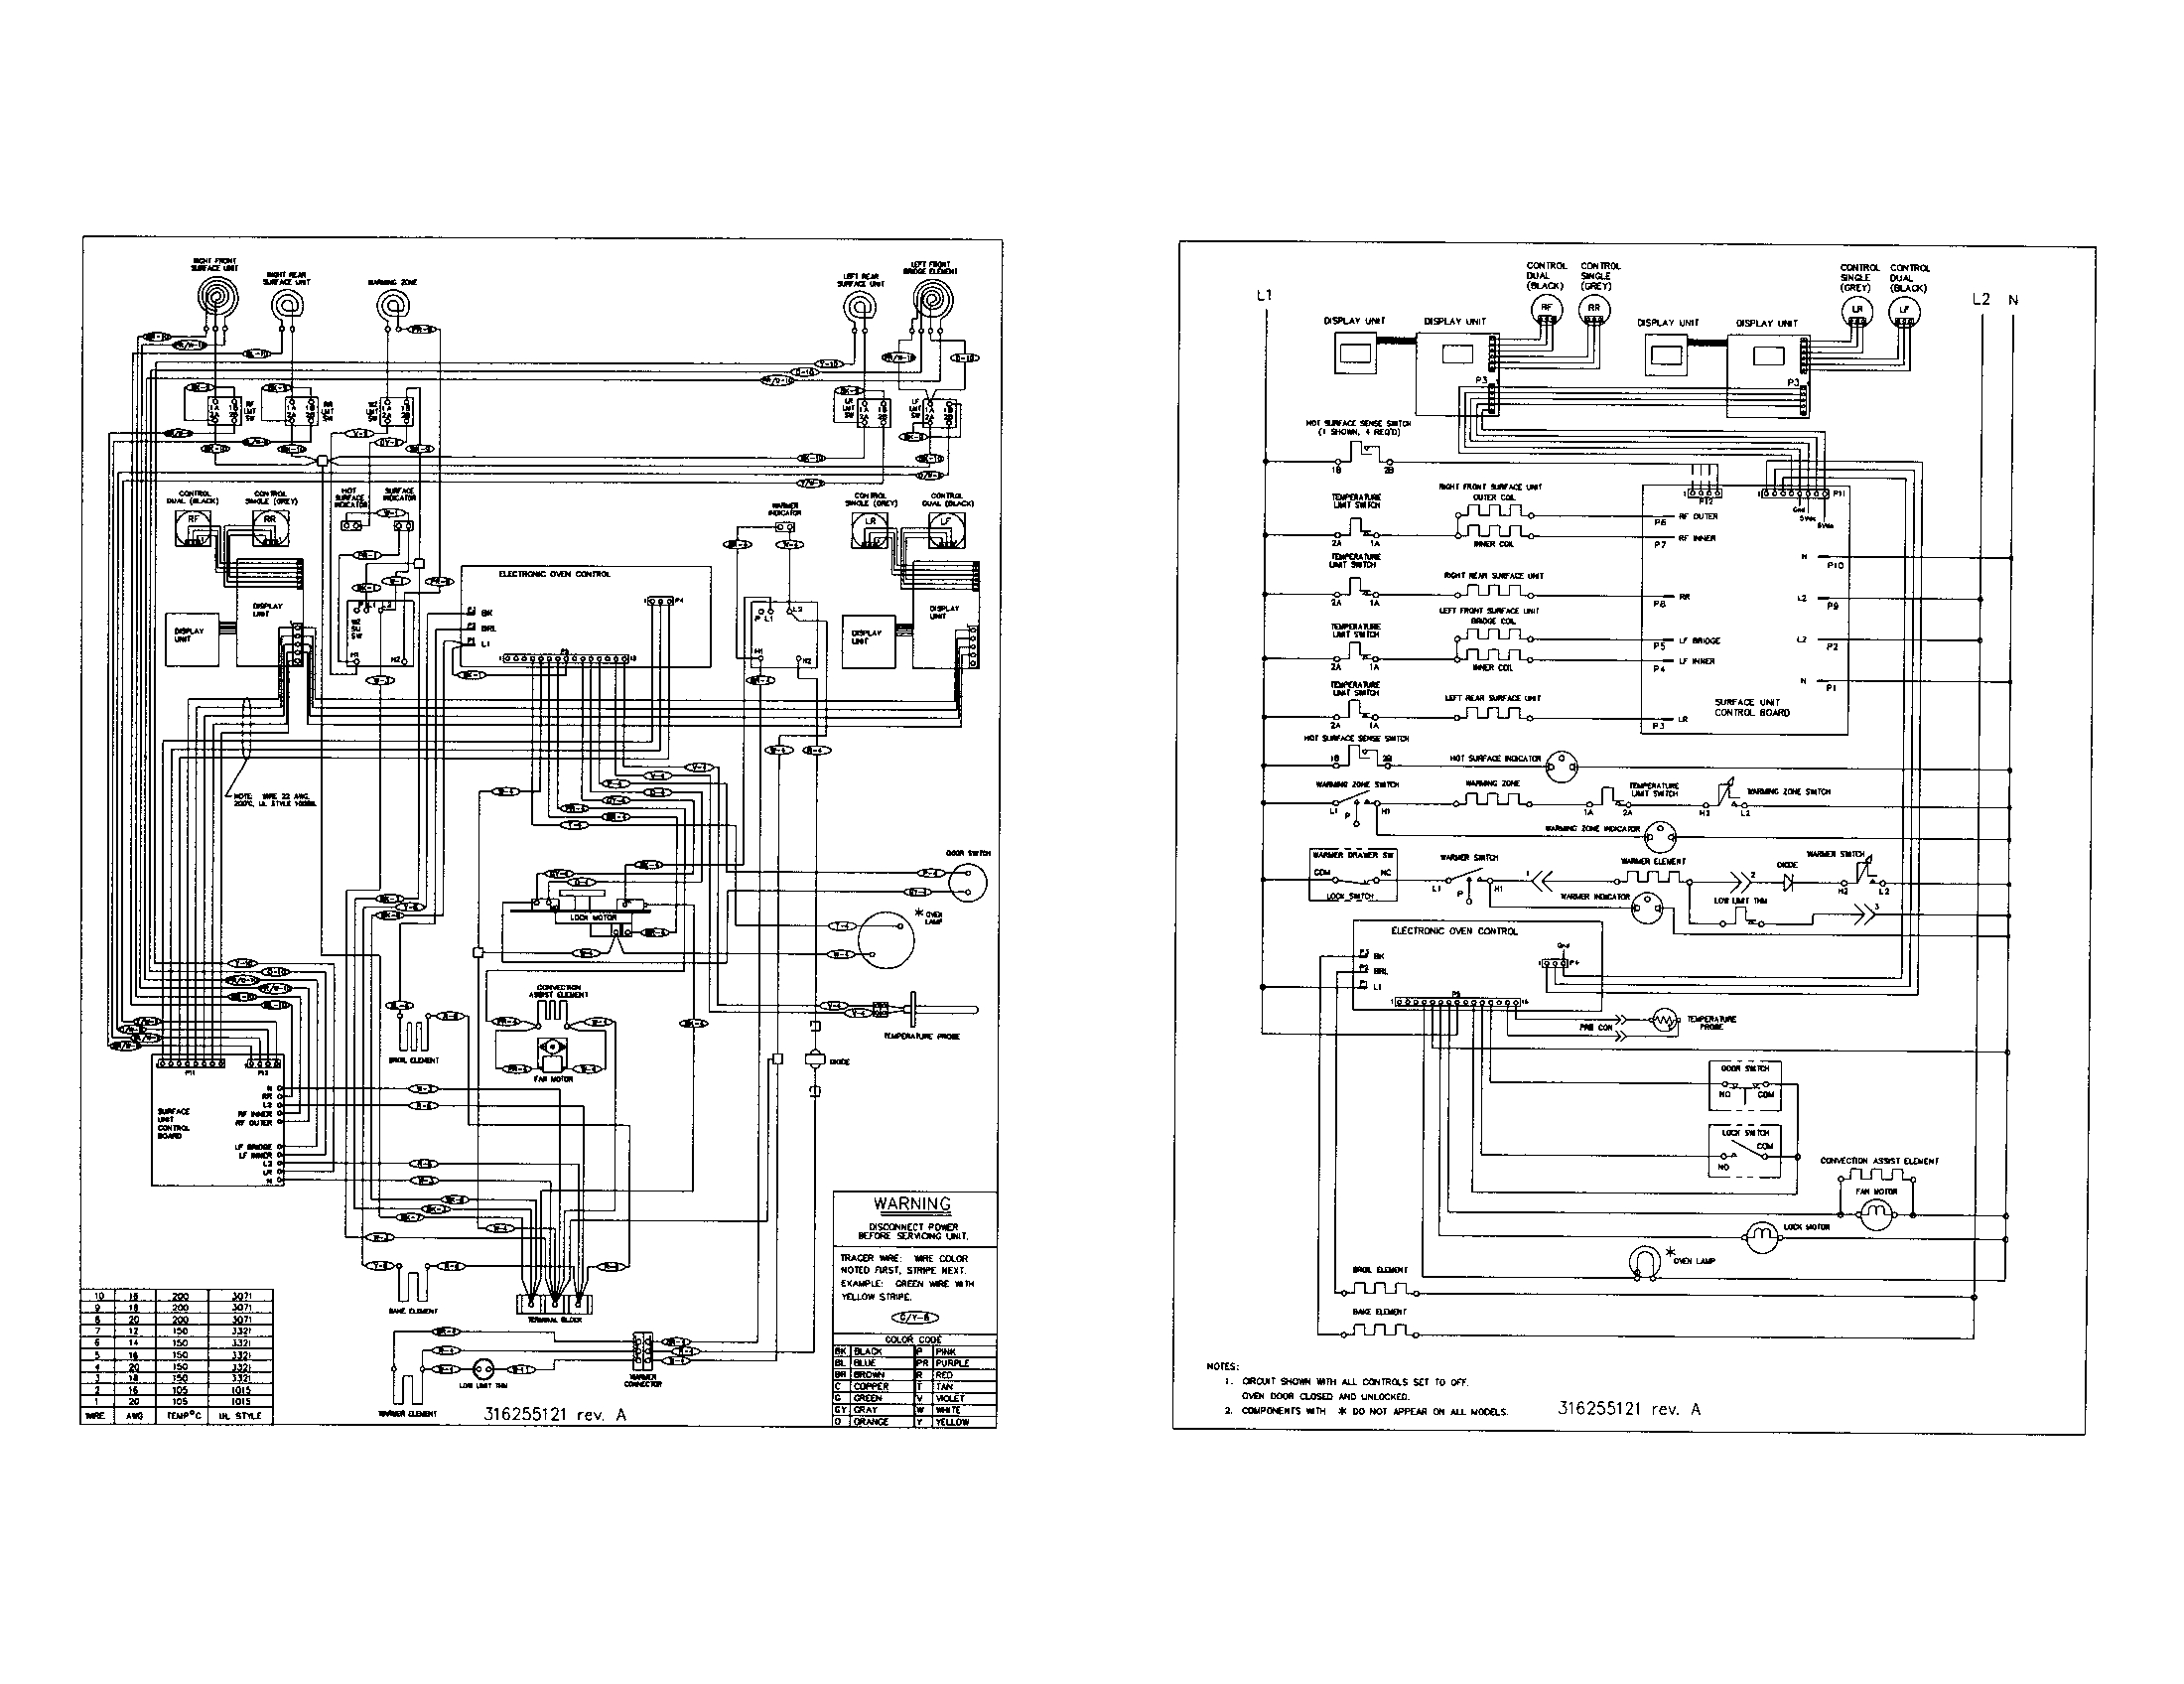 Kitchenaid Mixer Parts Diagram Kitchenaid Mixer Wiring Diagram Daily Update Wiring Diagram